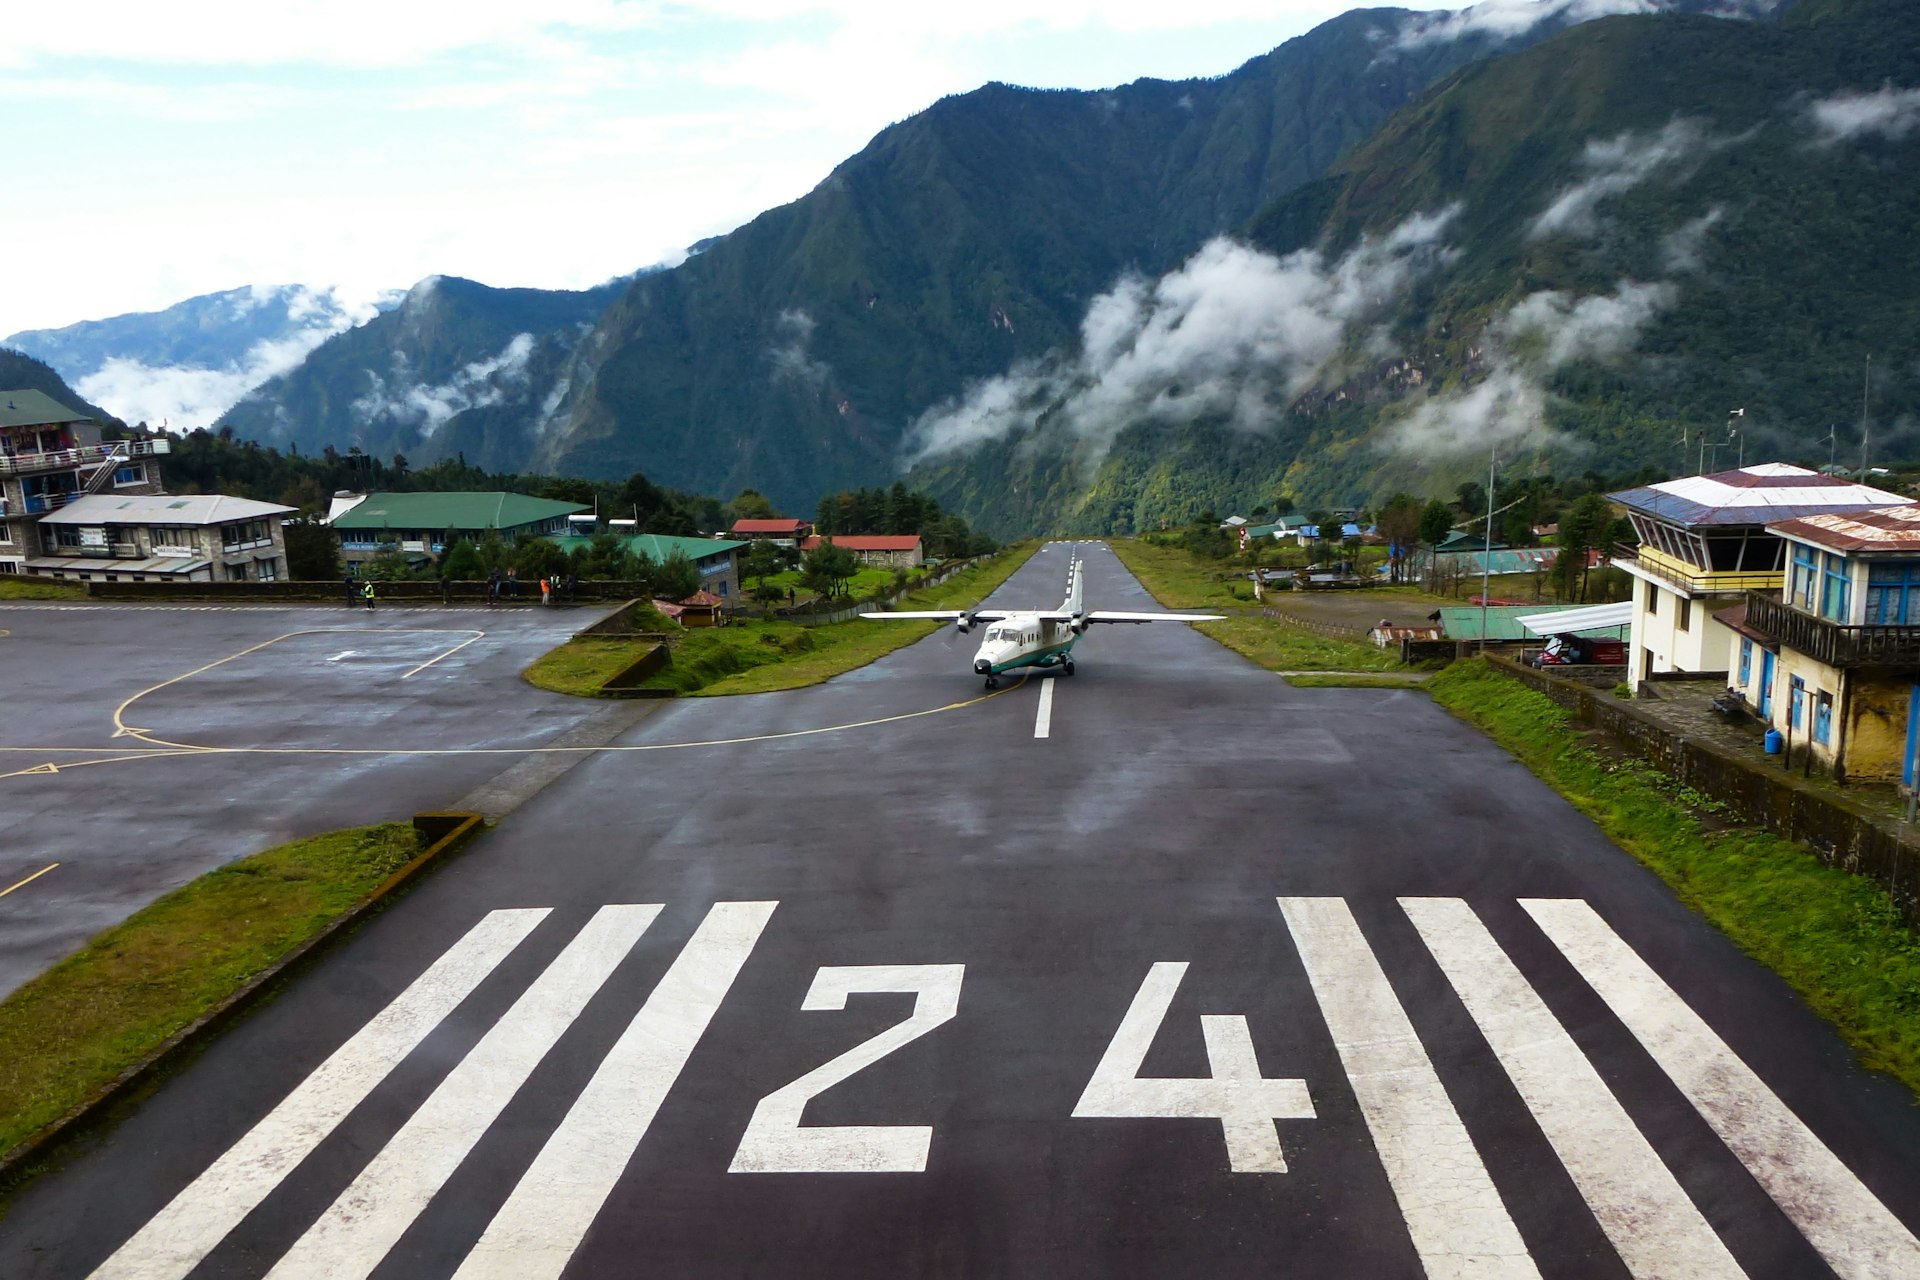 Small plane landing at the "Tenzing-Hillary" Airport in Lukla, Everest Base Camp trek, Nepal